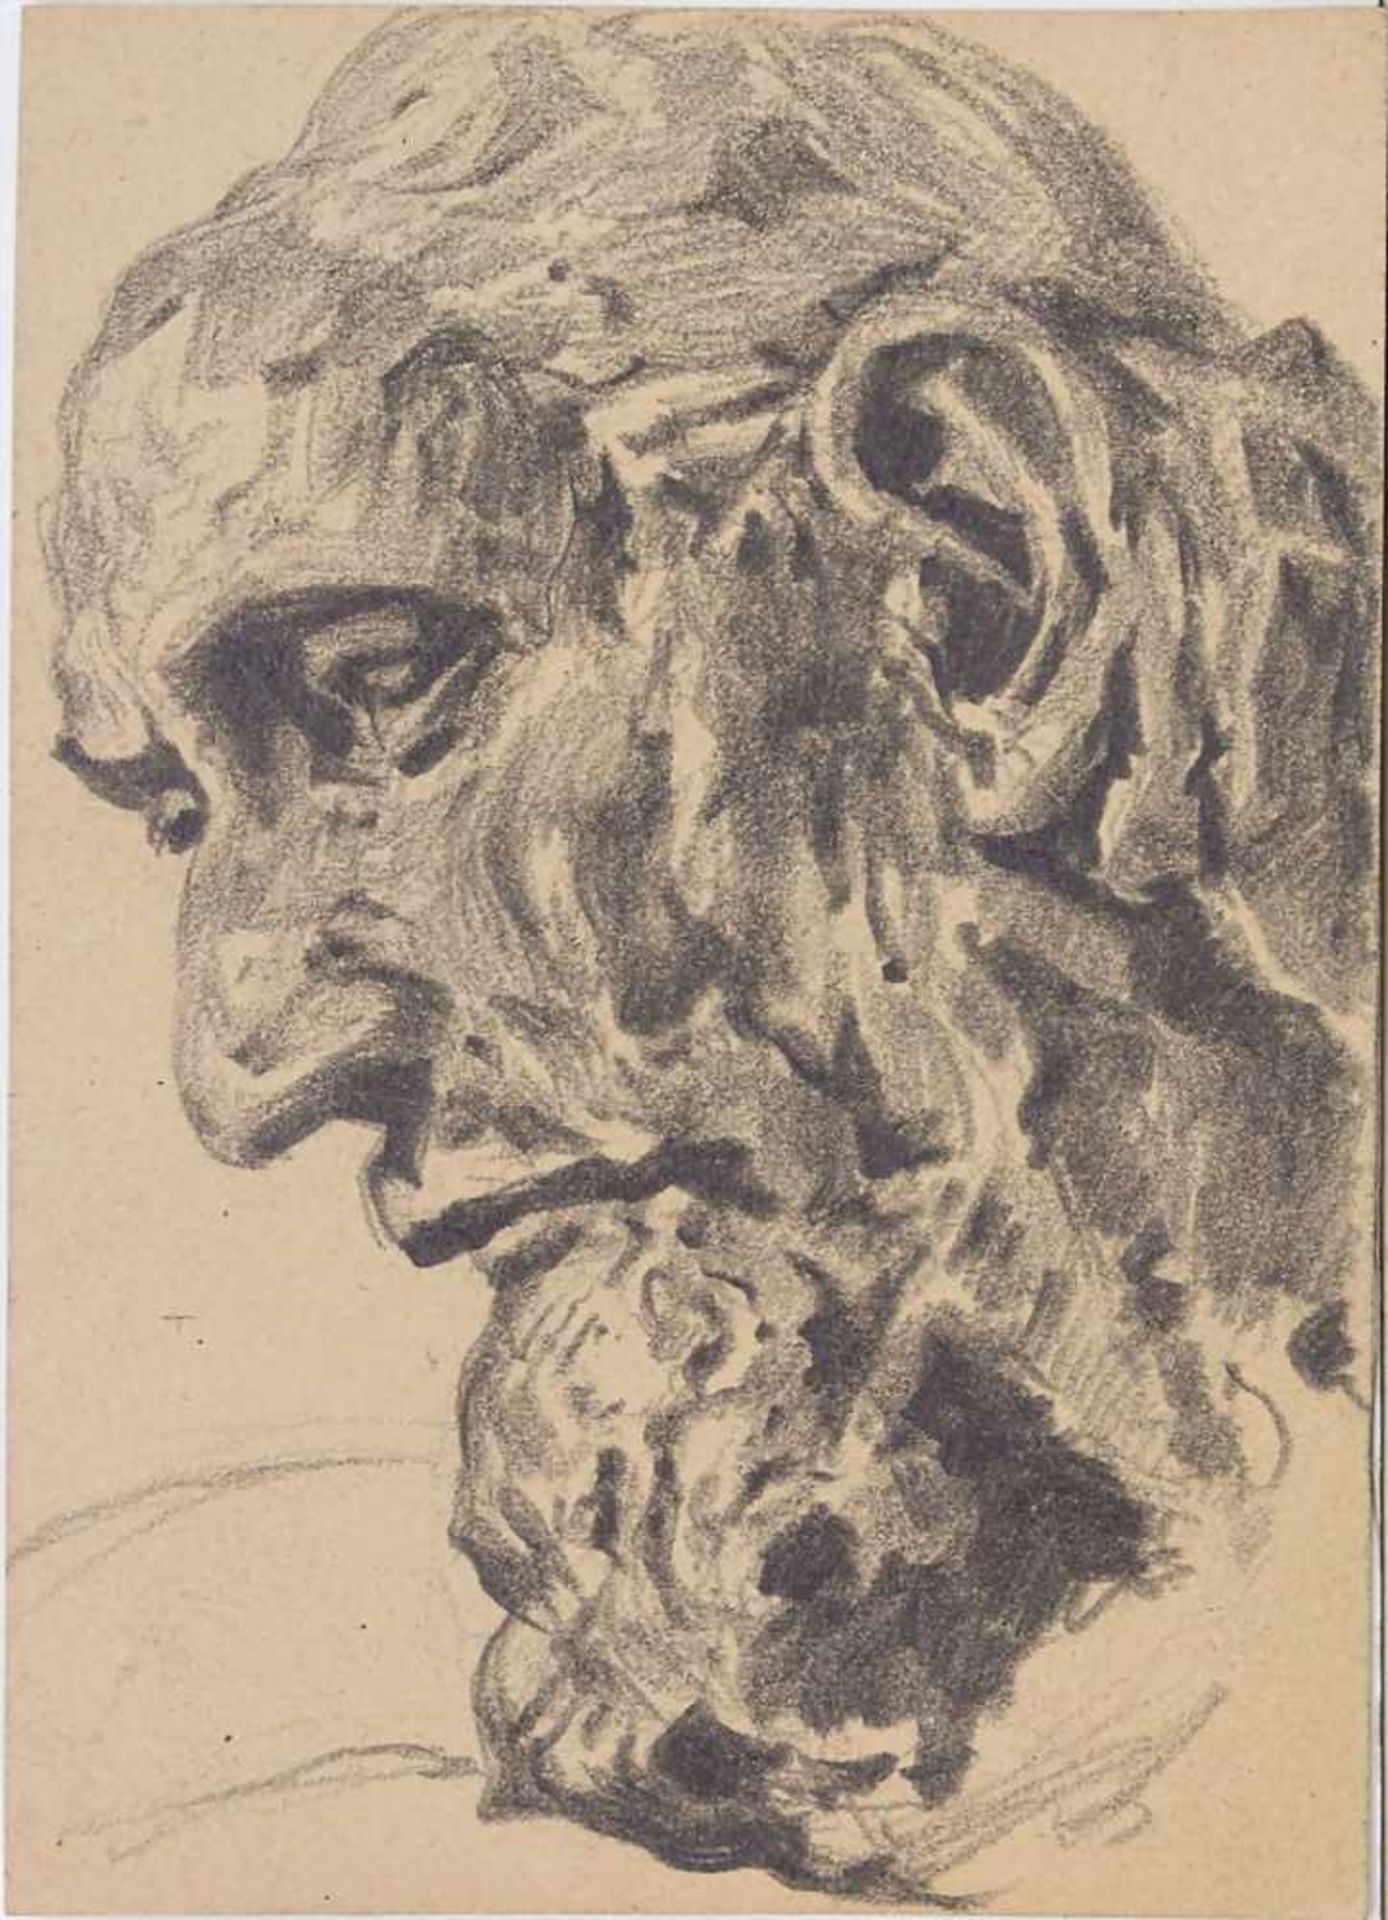 Künstler des 19. Jh., 'Porträt eines Bärtigen' / 'A portrait of a bearded man'Technik: Bleistift auf